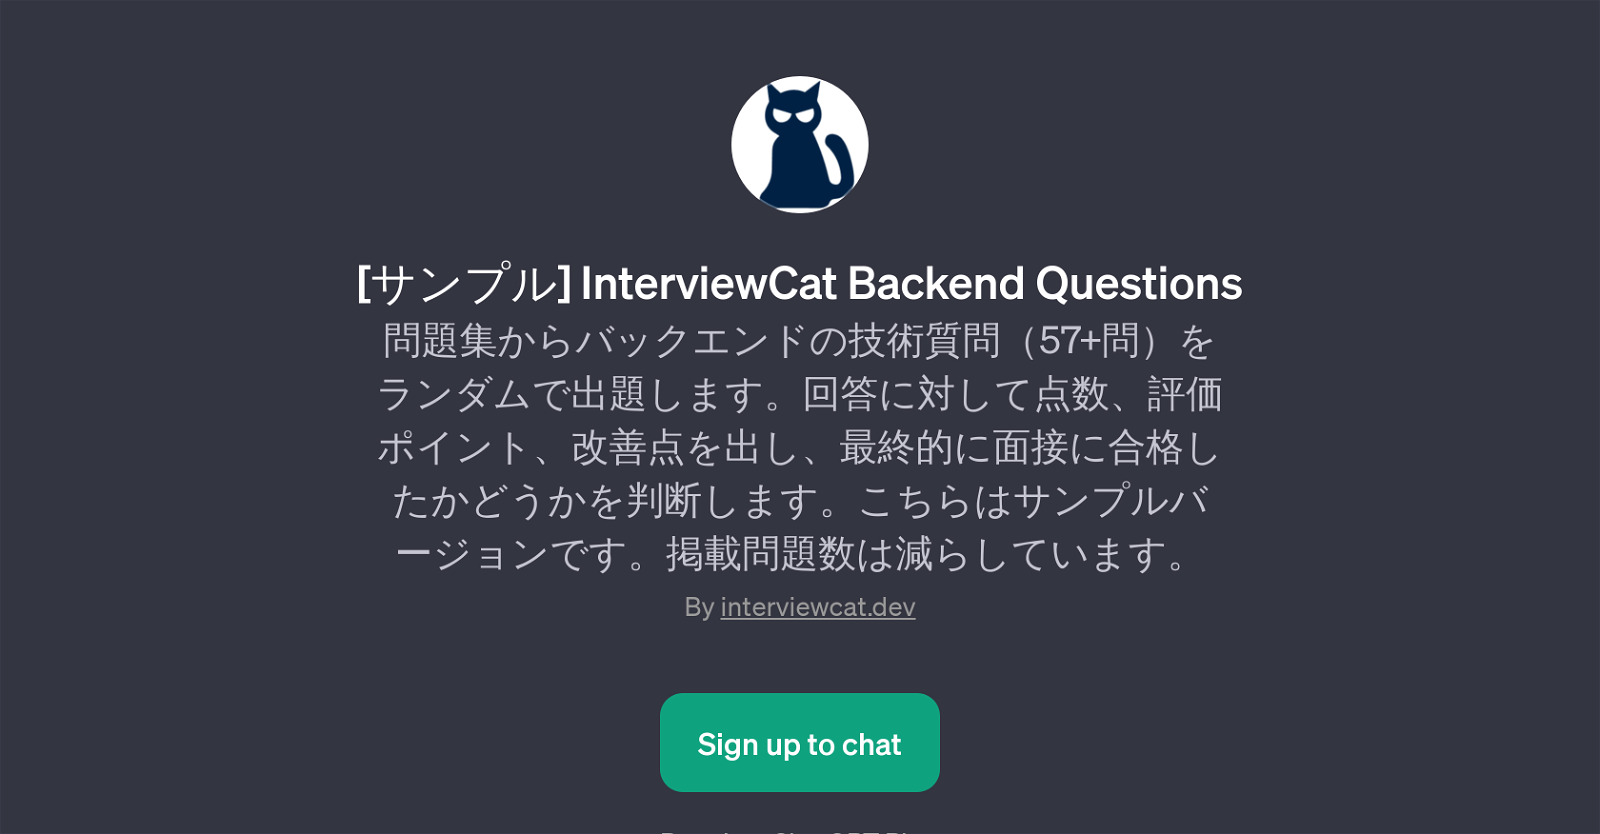 InterviewCat Backend Questions website